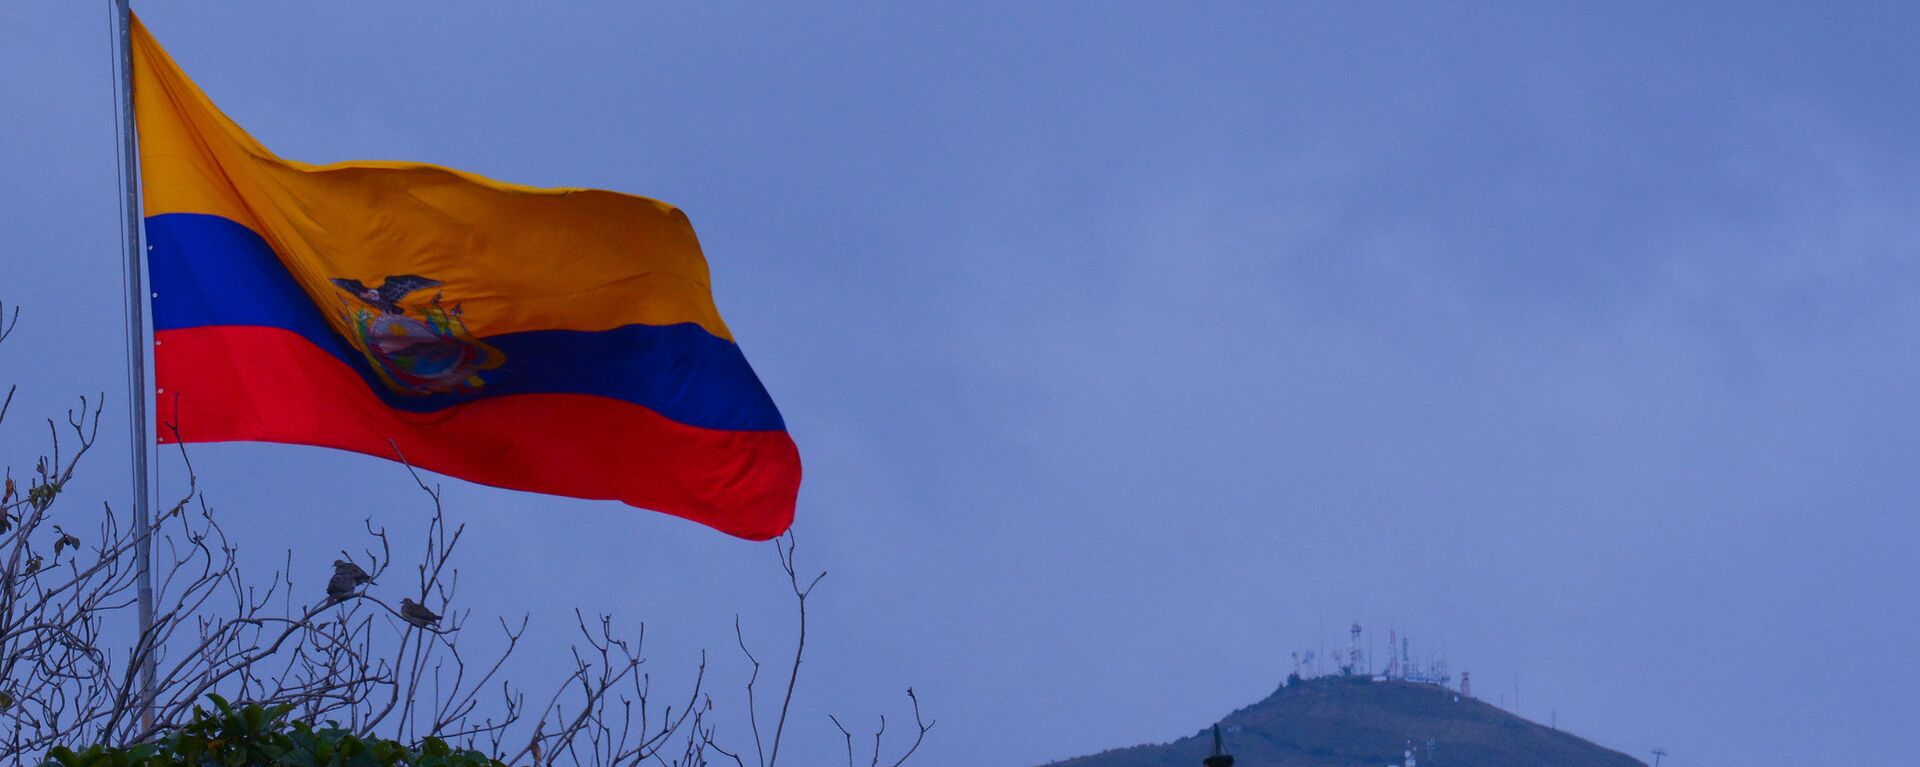 La bandera de Ecuador - Sputnik Mundo, 1920, 17.06.2021